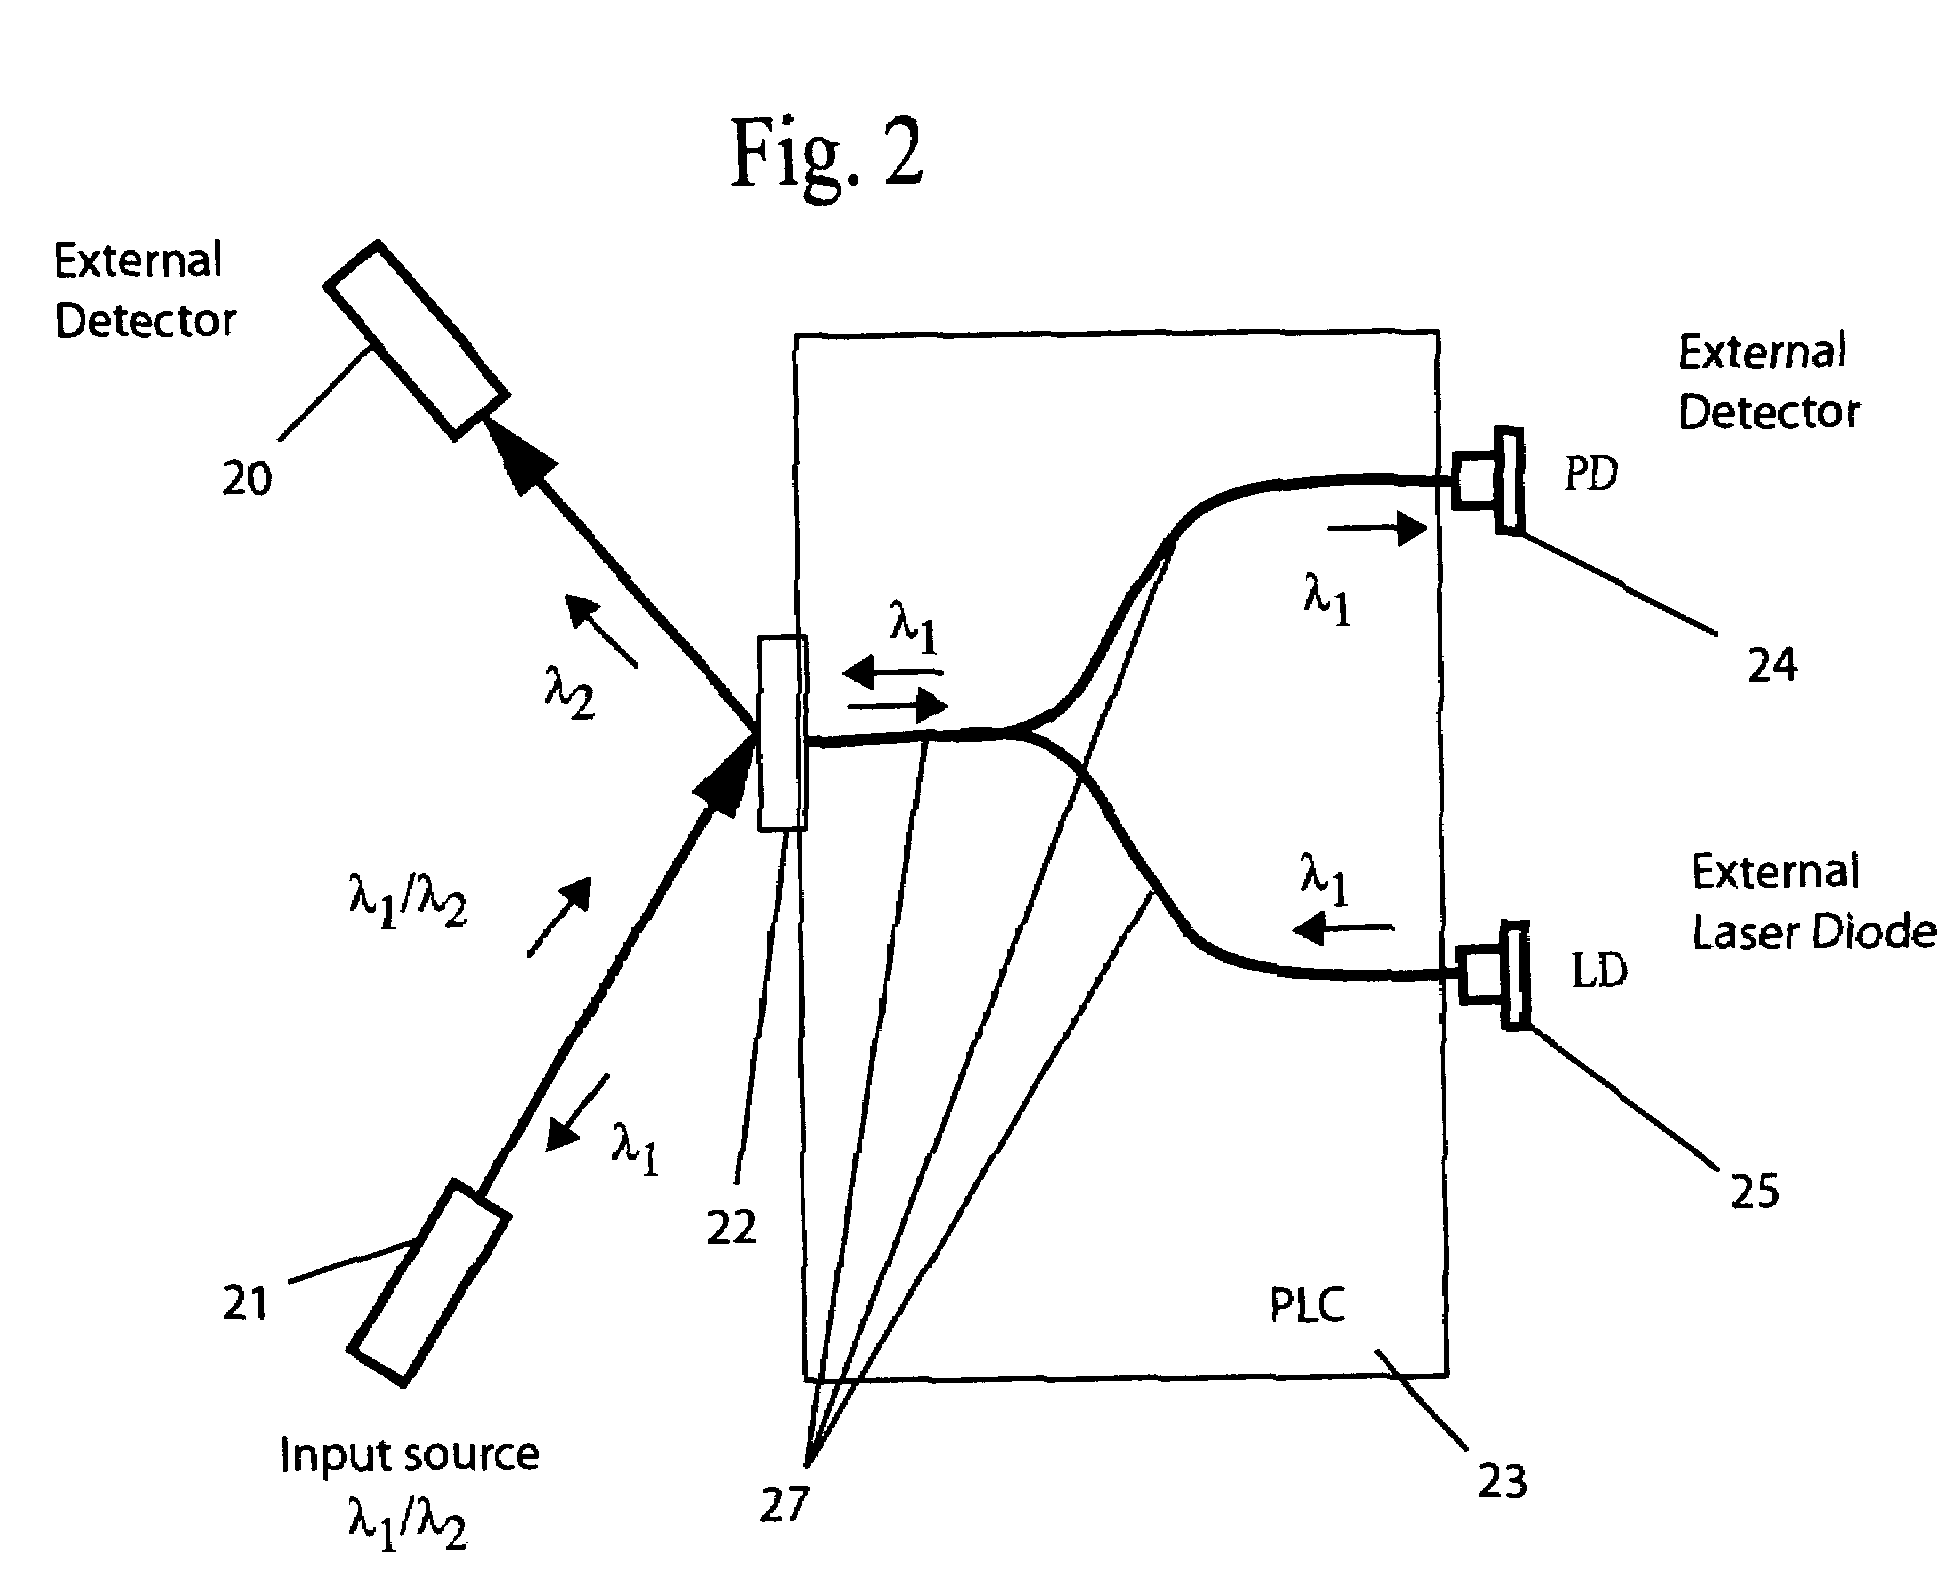 Bi-directional PLC transceiver device